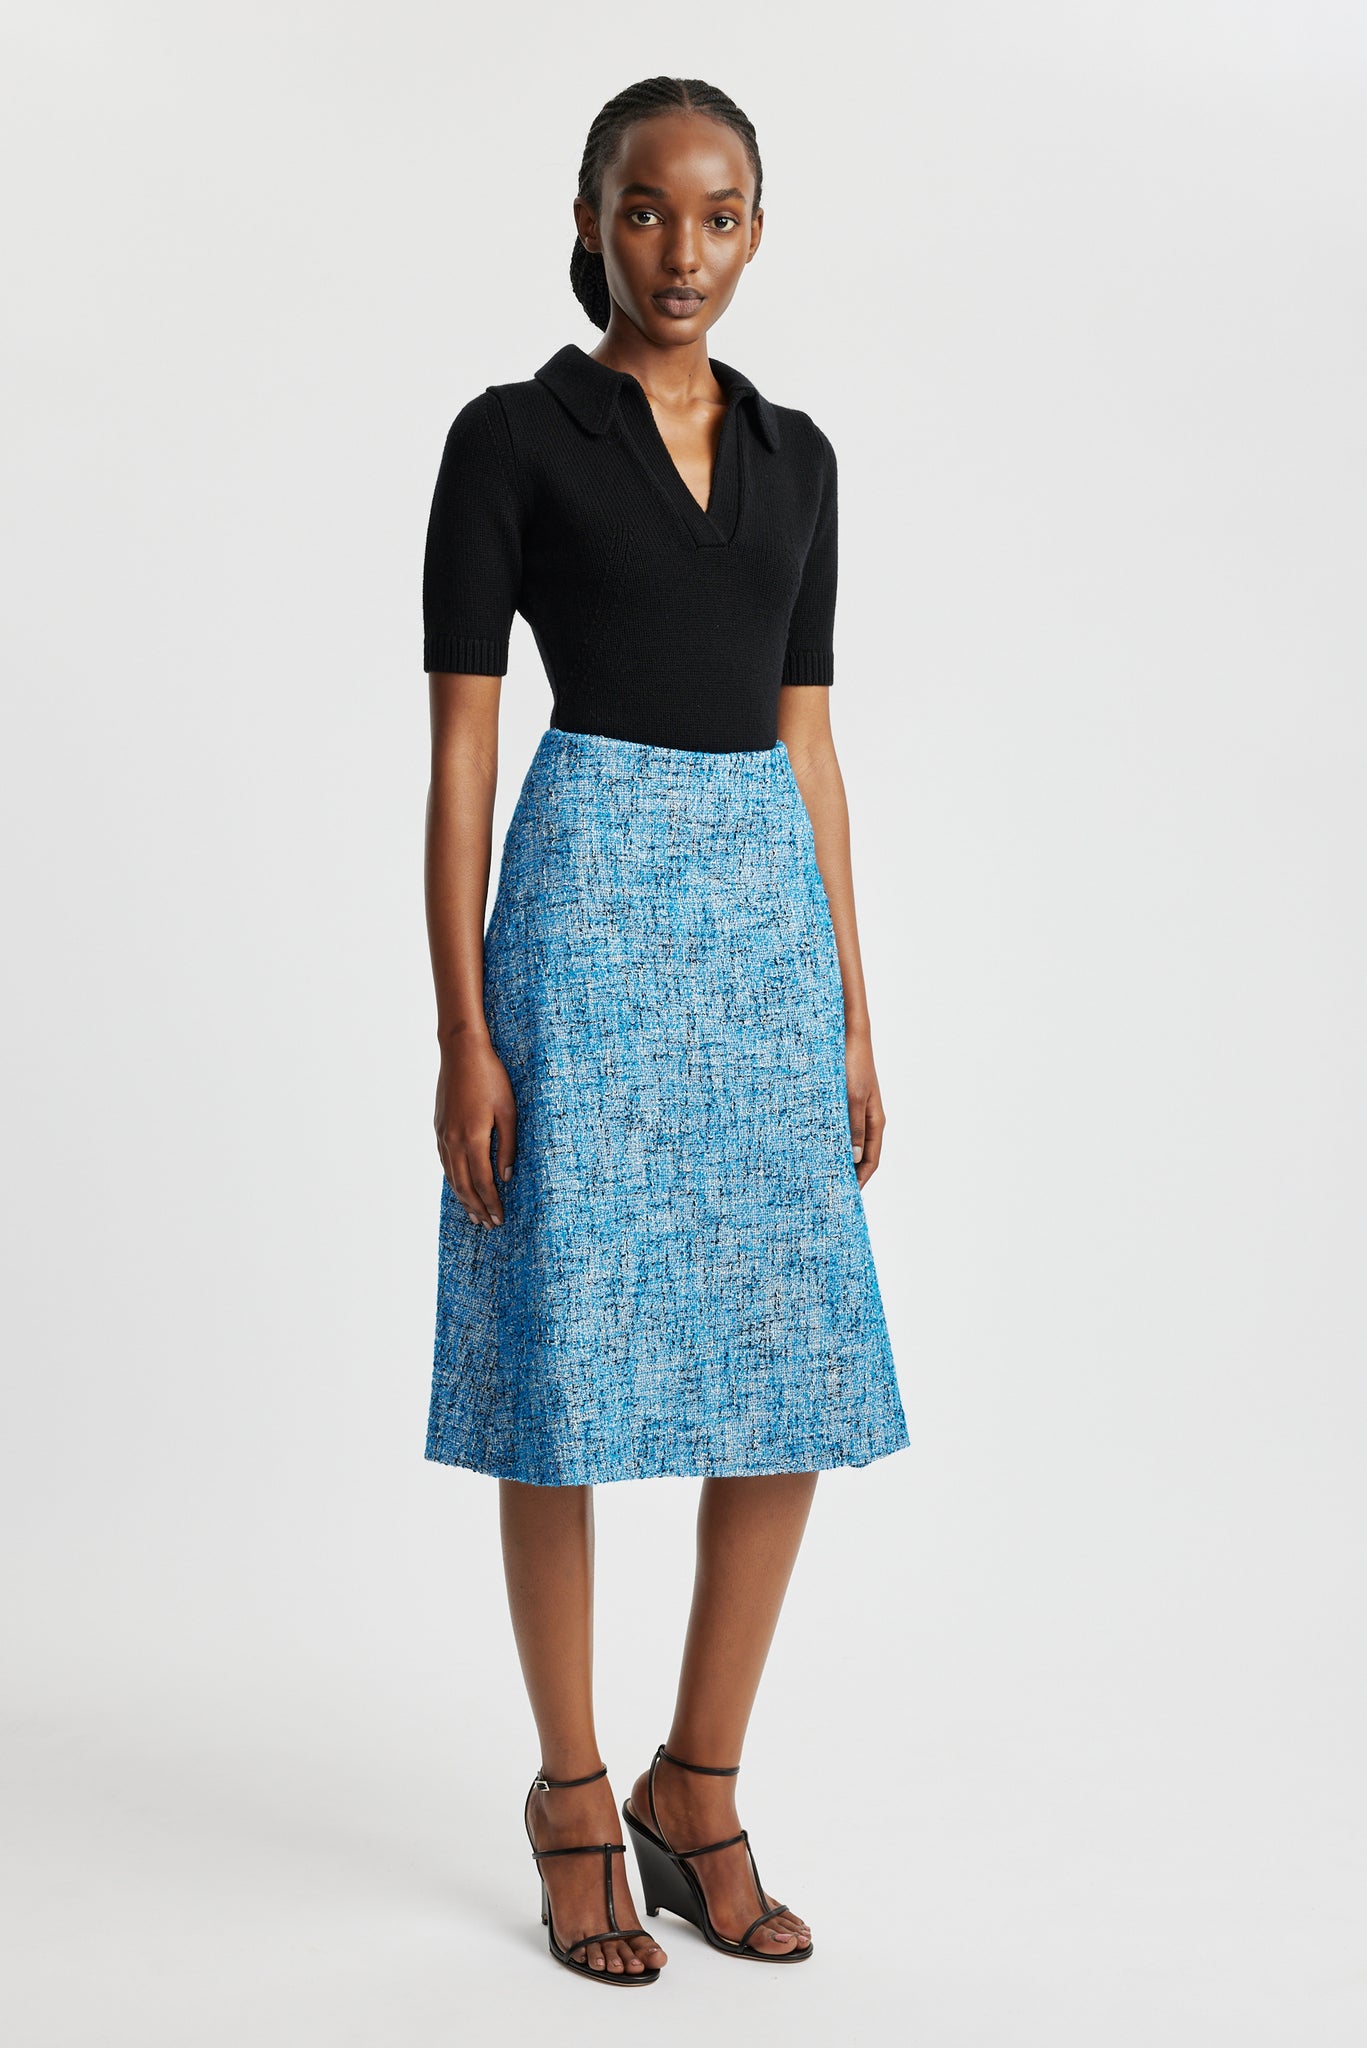 Tamsyn Skirt In Blue Cotton Tweed | Emilia Wickstead